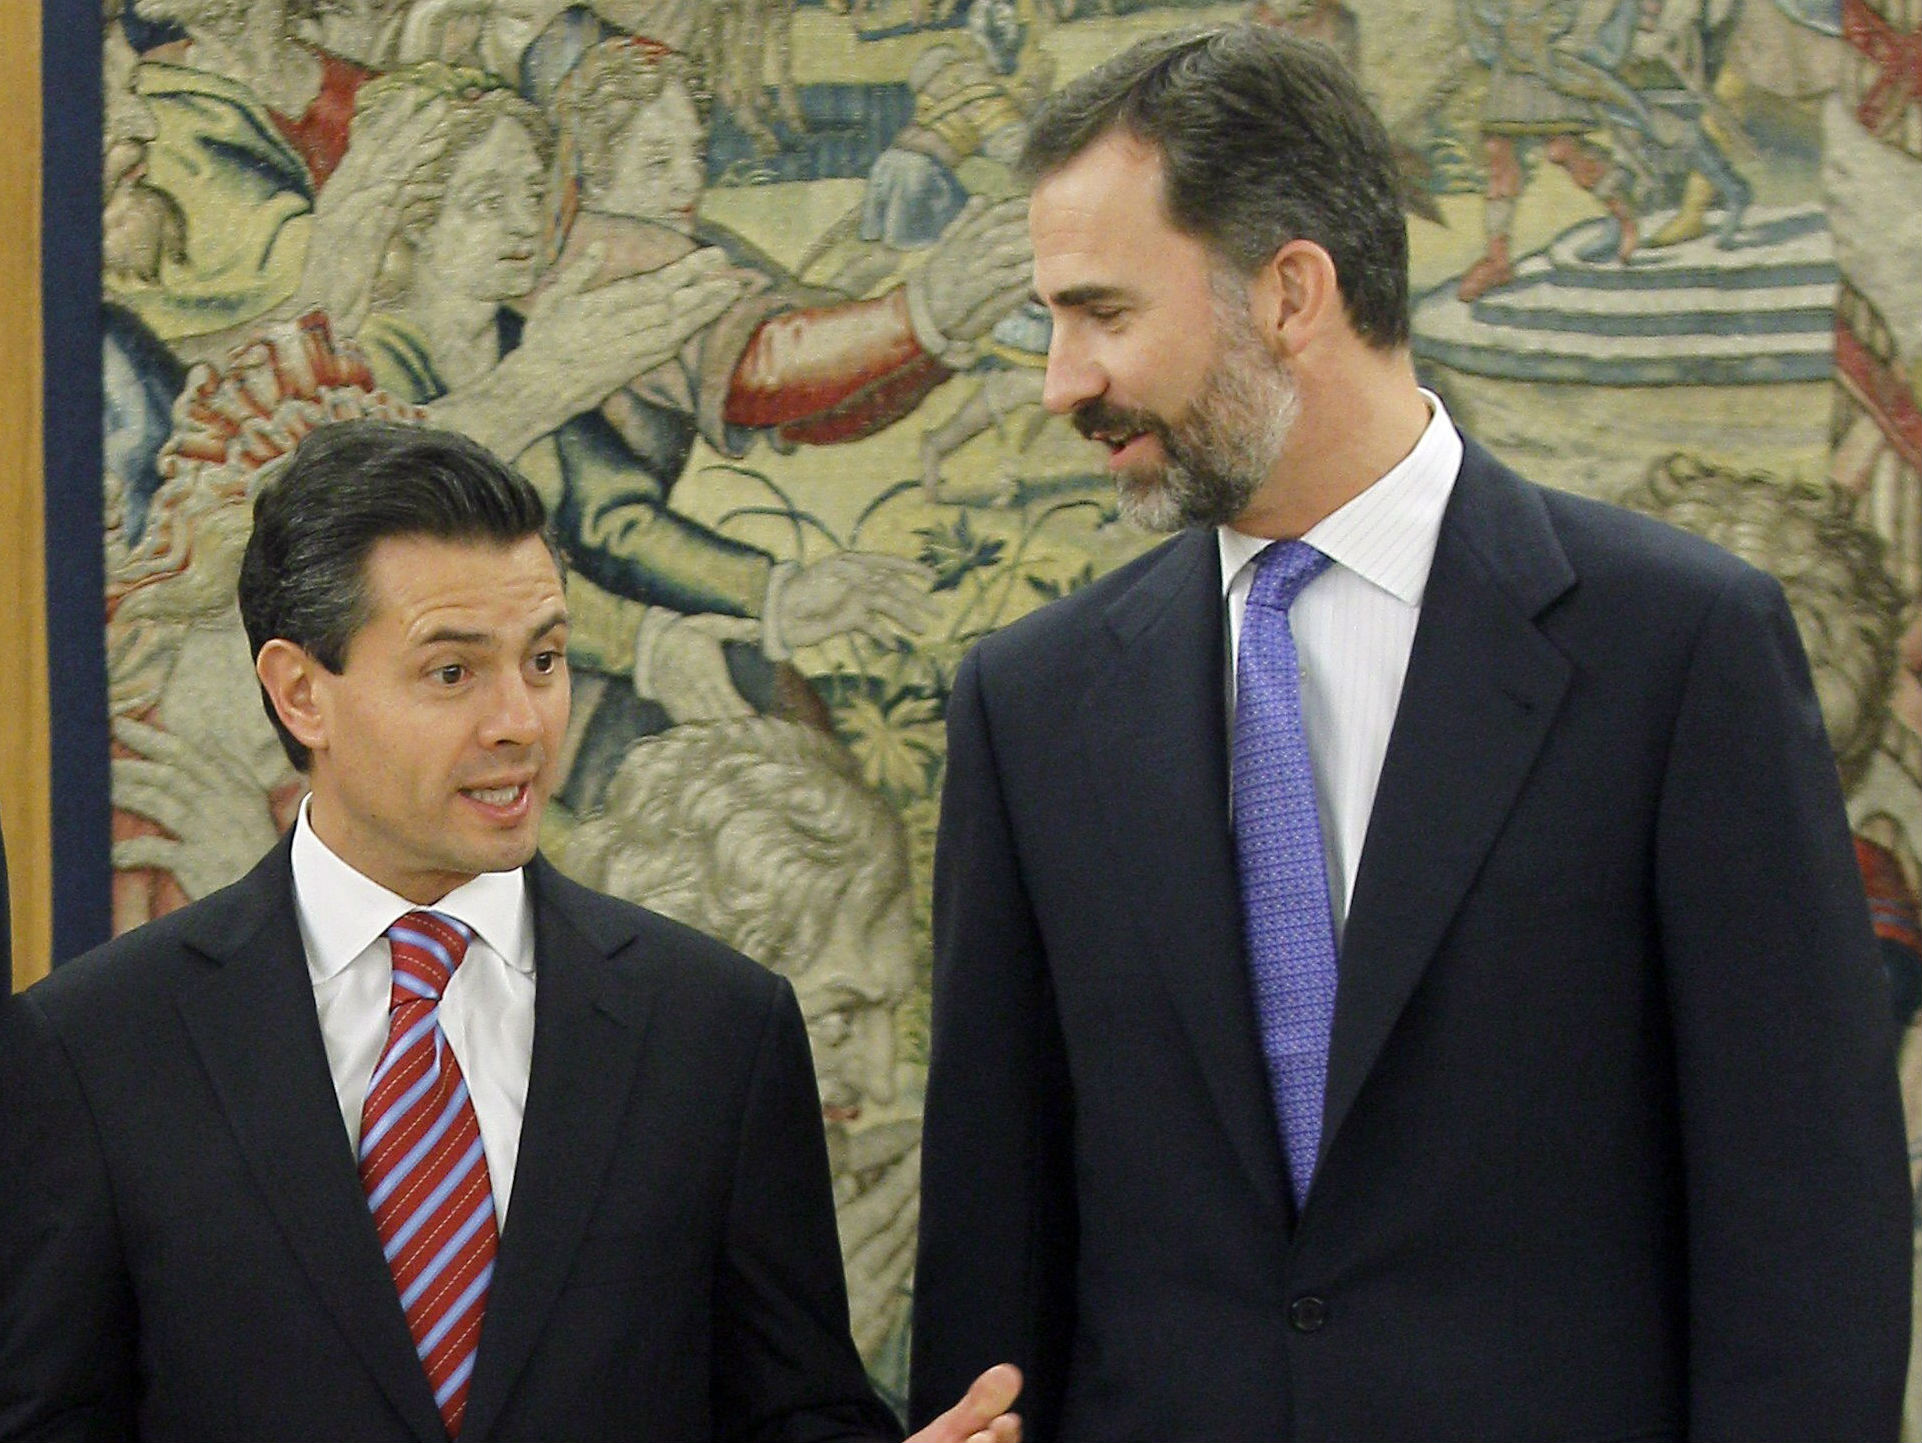 Desafortunada, la foto alterada de Peña Nieto: Comex - Astrolabio